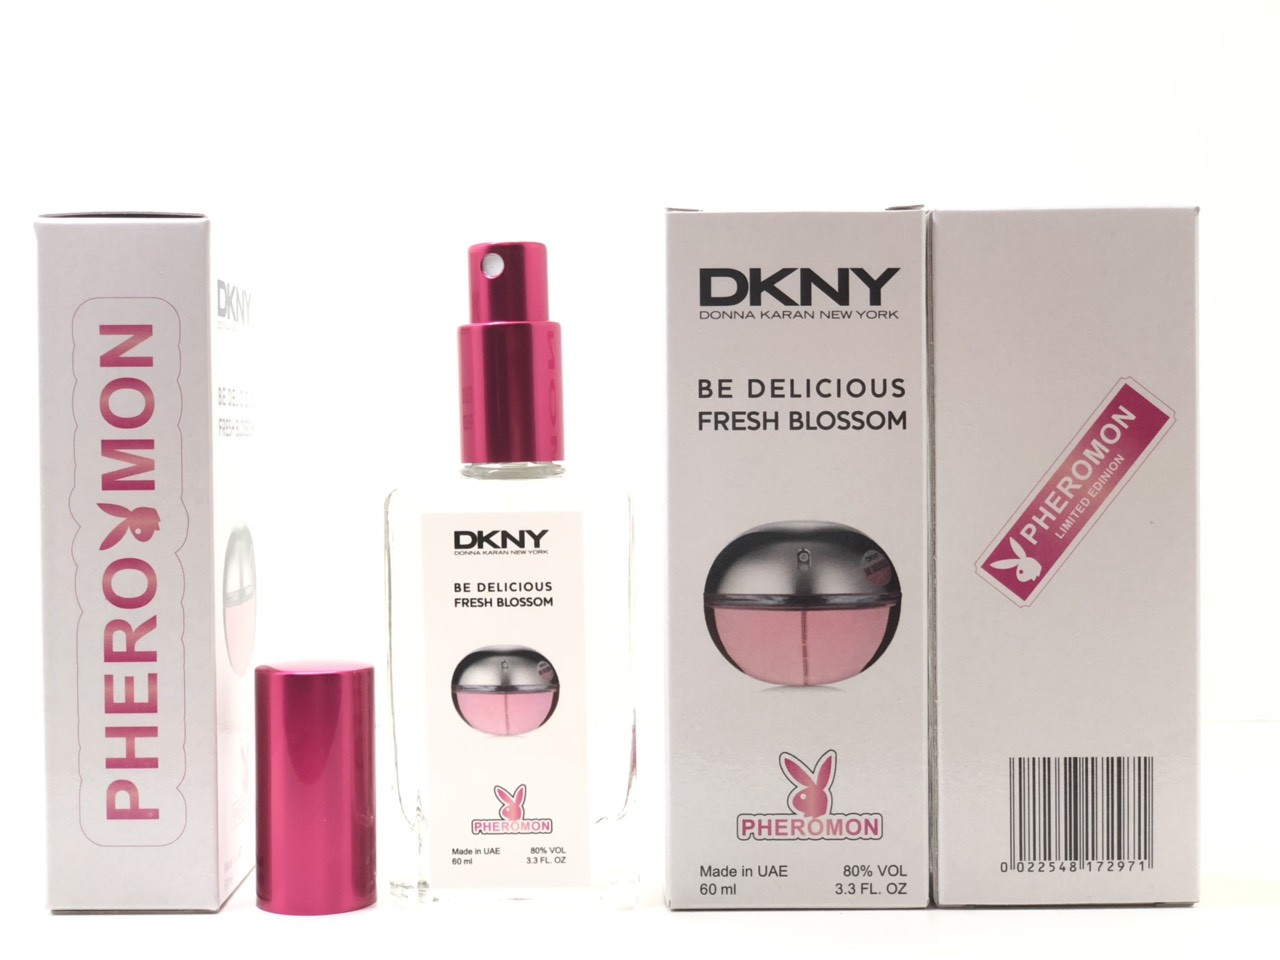 Жіночий аромат DKNY Be Delicious Fresh Blossom (Донна Каран фреш Блосом) з феромоном 60 мл